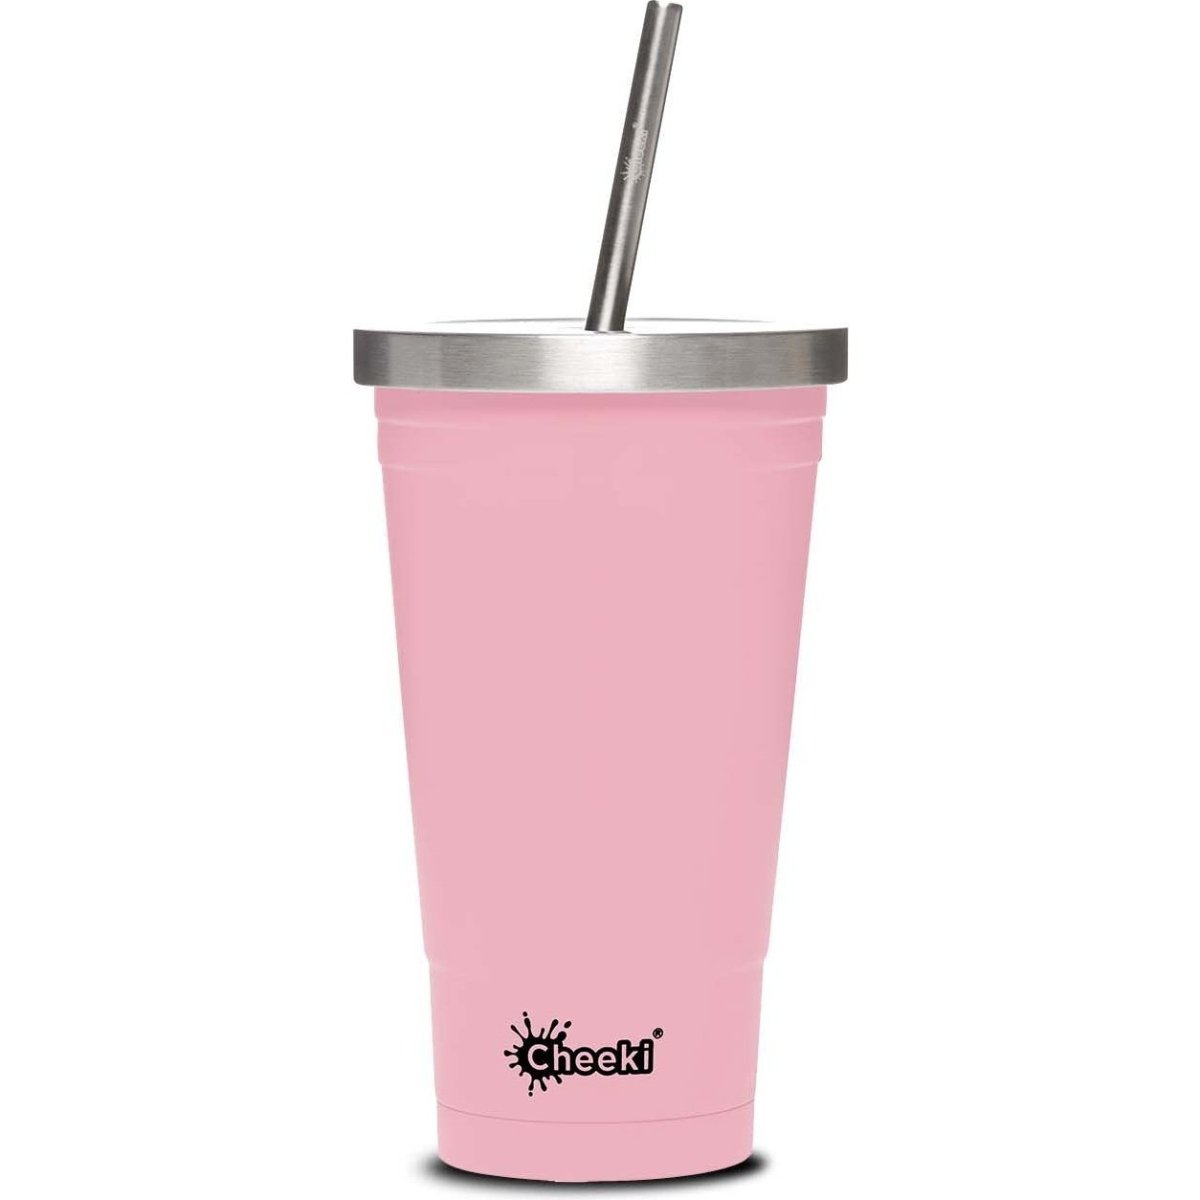 Cheeki 500ml Insulated Drink Tumbler -  Pink